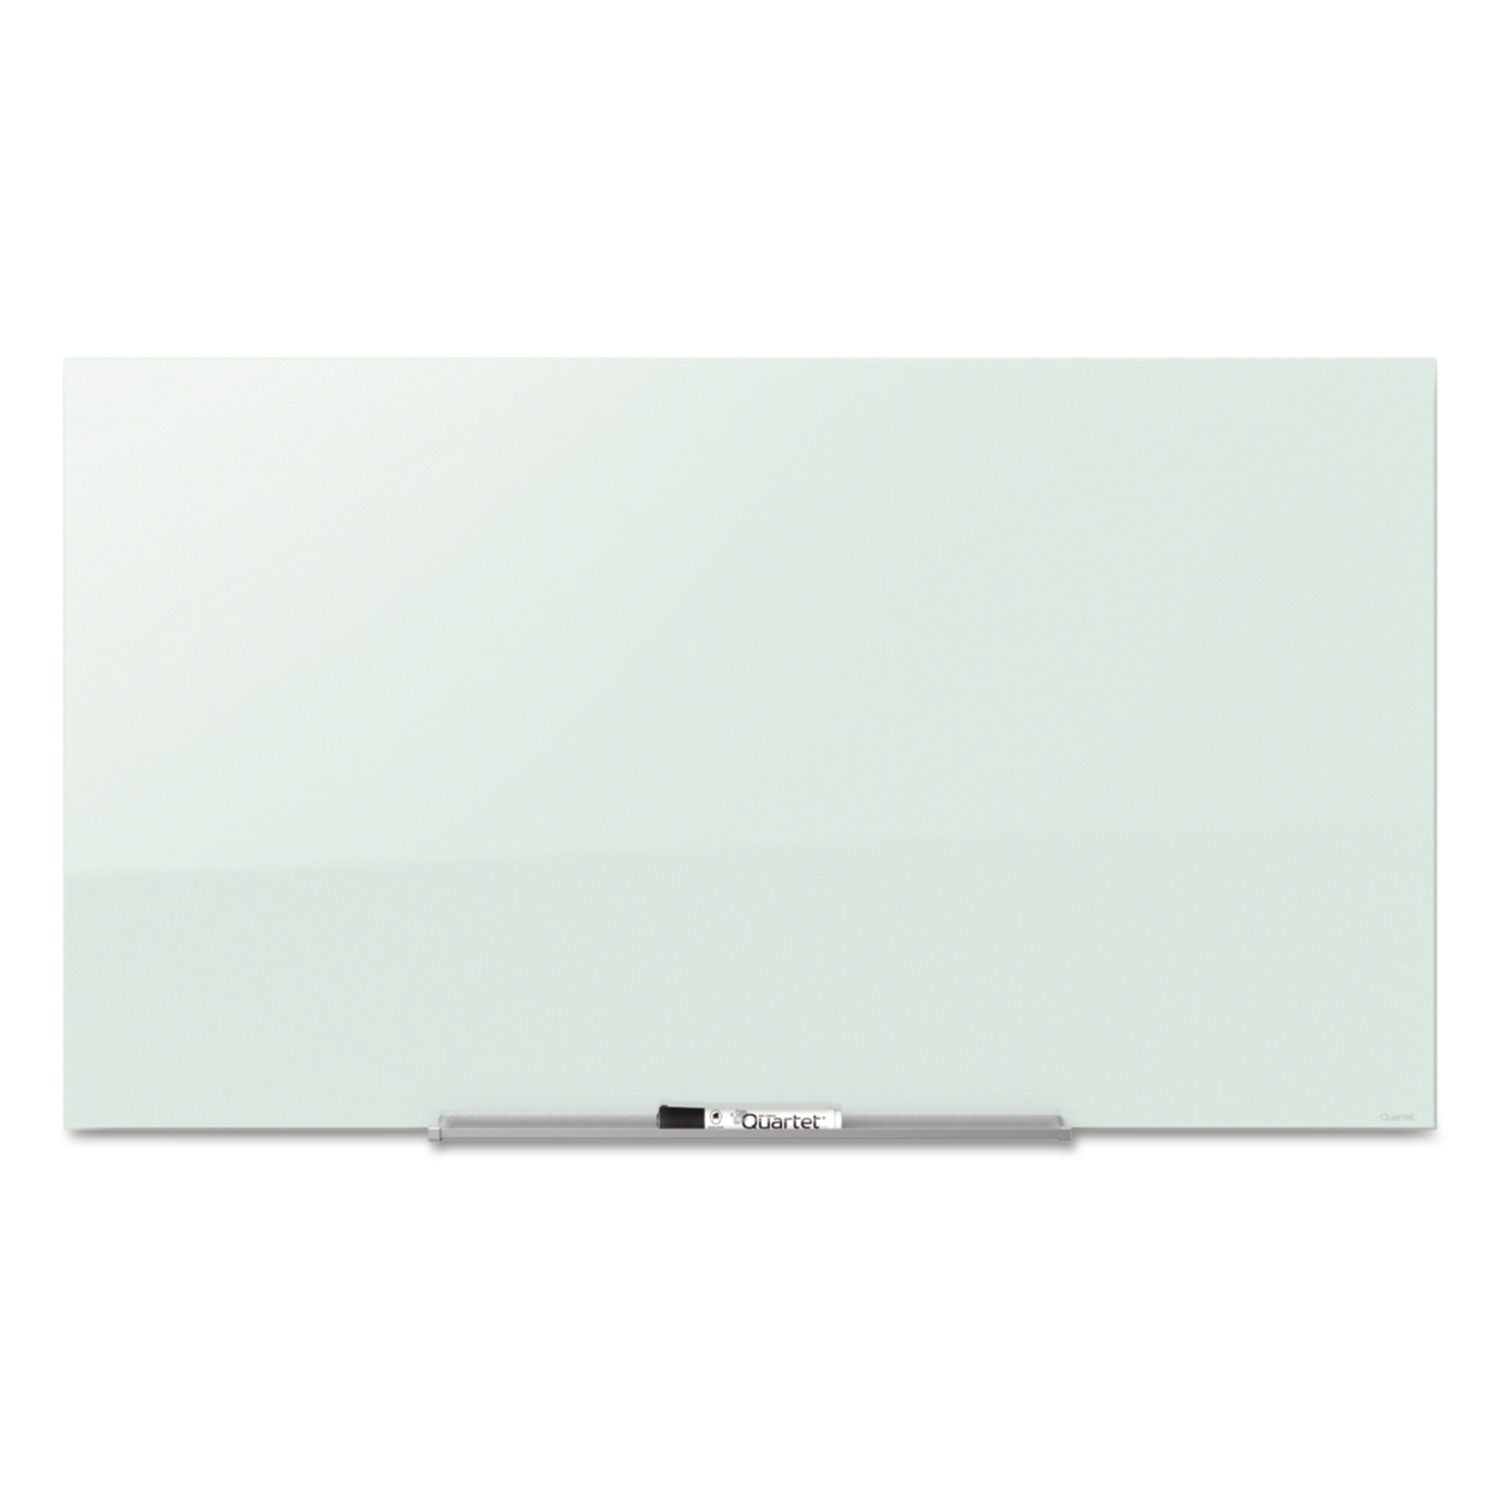 invisamount-magnetic-glass-marker-board-39-x-22-white-surface_qrtg3922imw - 1